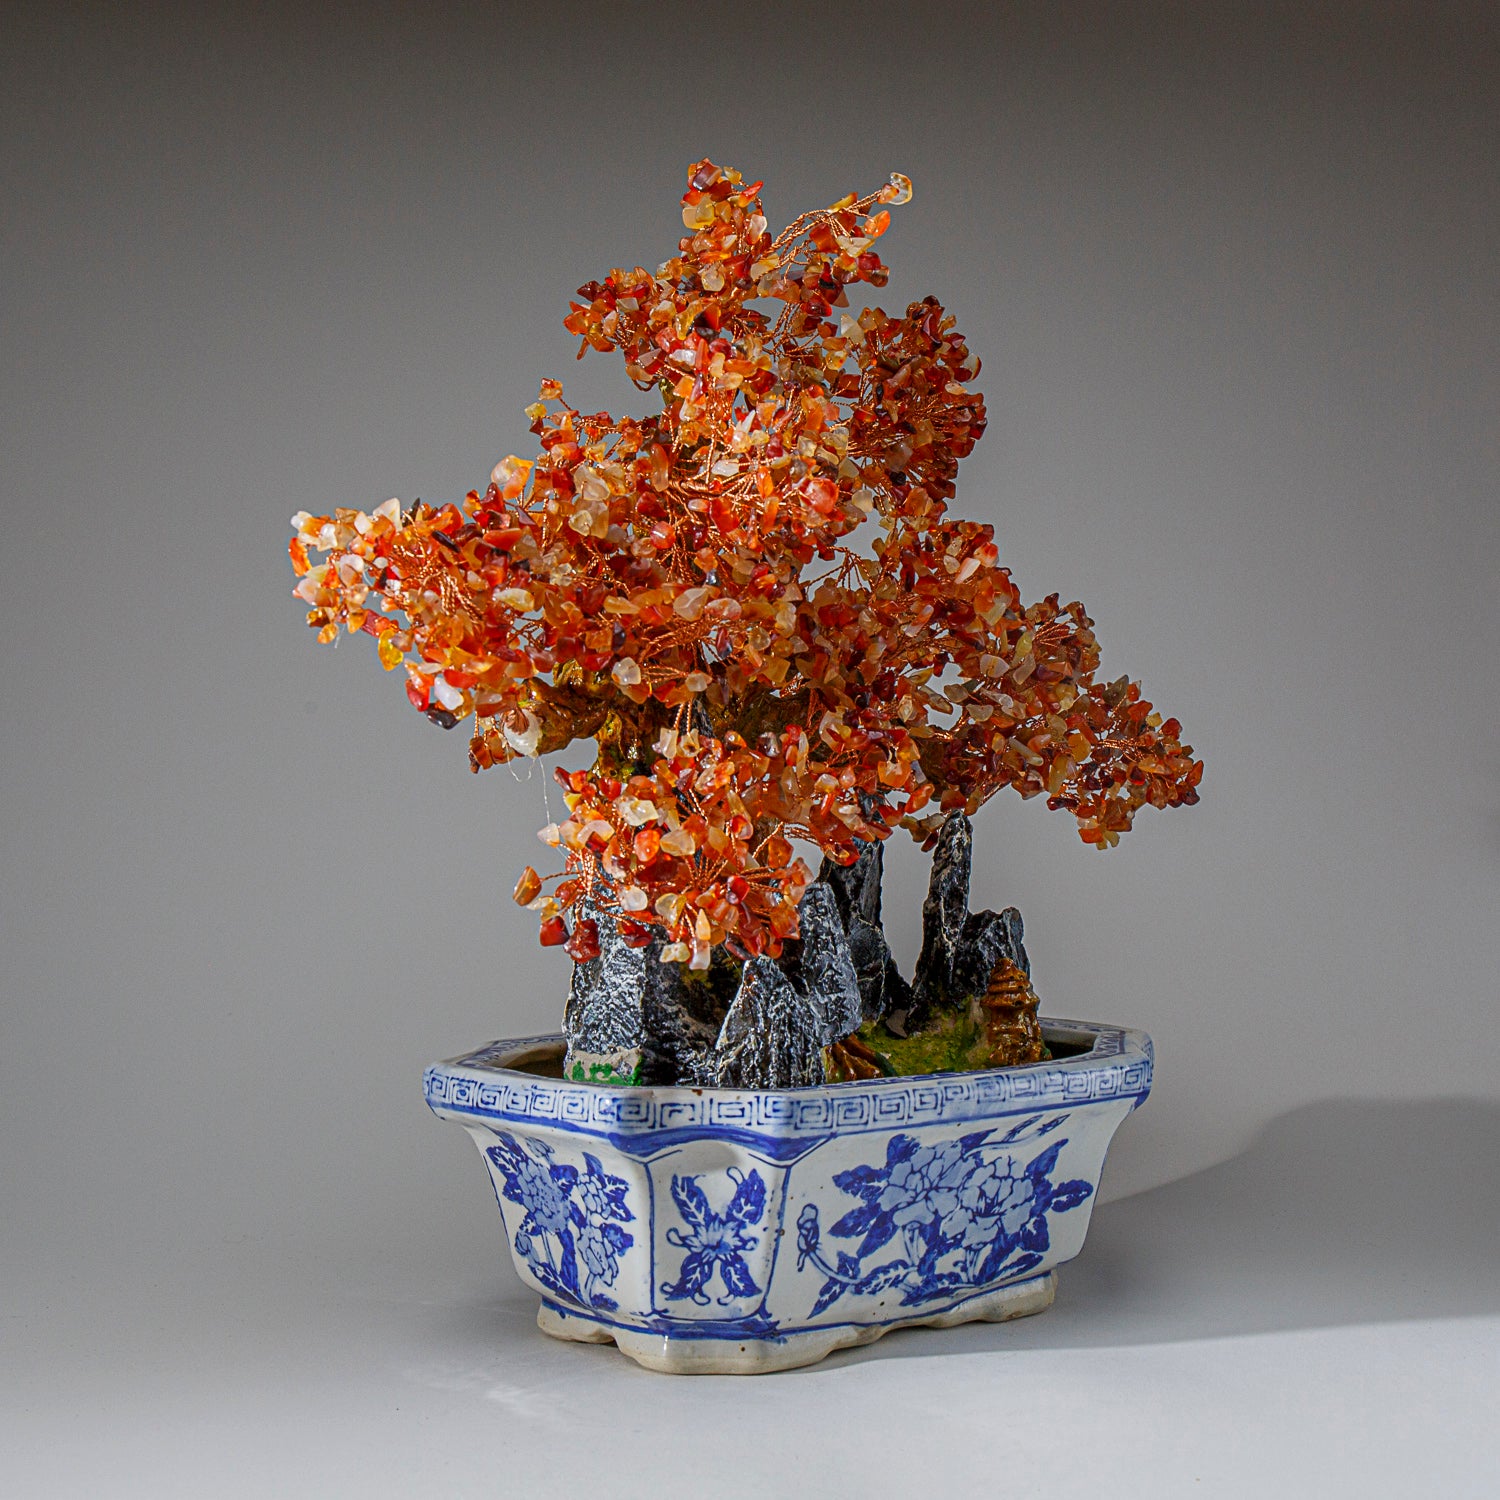 Genuine Carnelian Gemstone Bonsai Tree in Square Ceramic Pot (15” Tall)